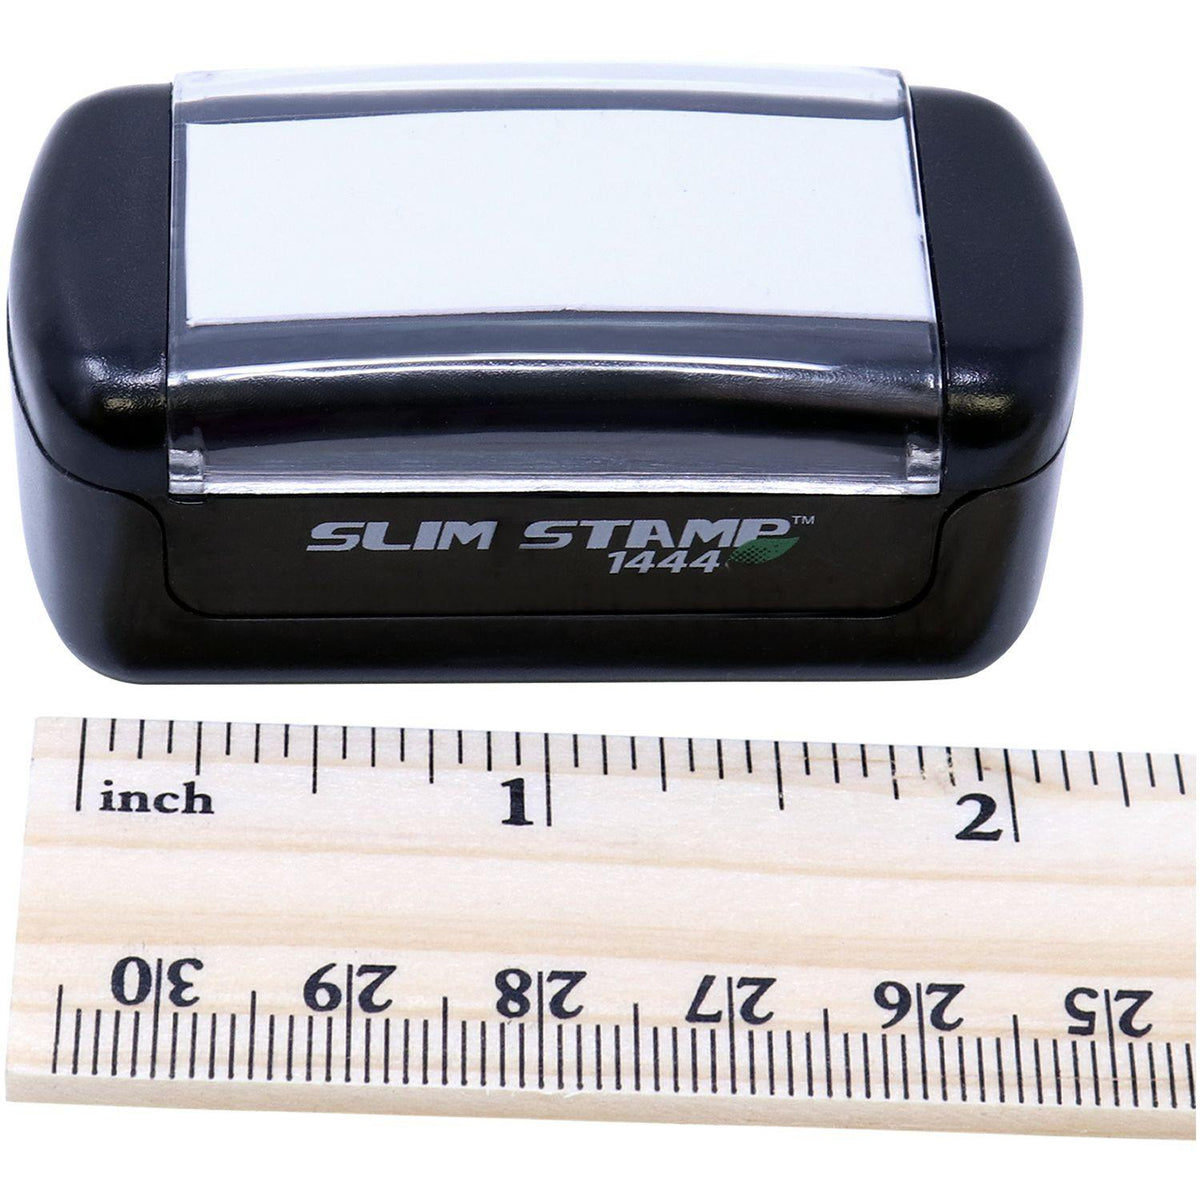 Measurement Slim Pre-Inked Urgente Stamp with Ruler